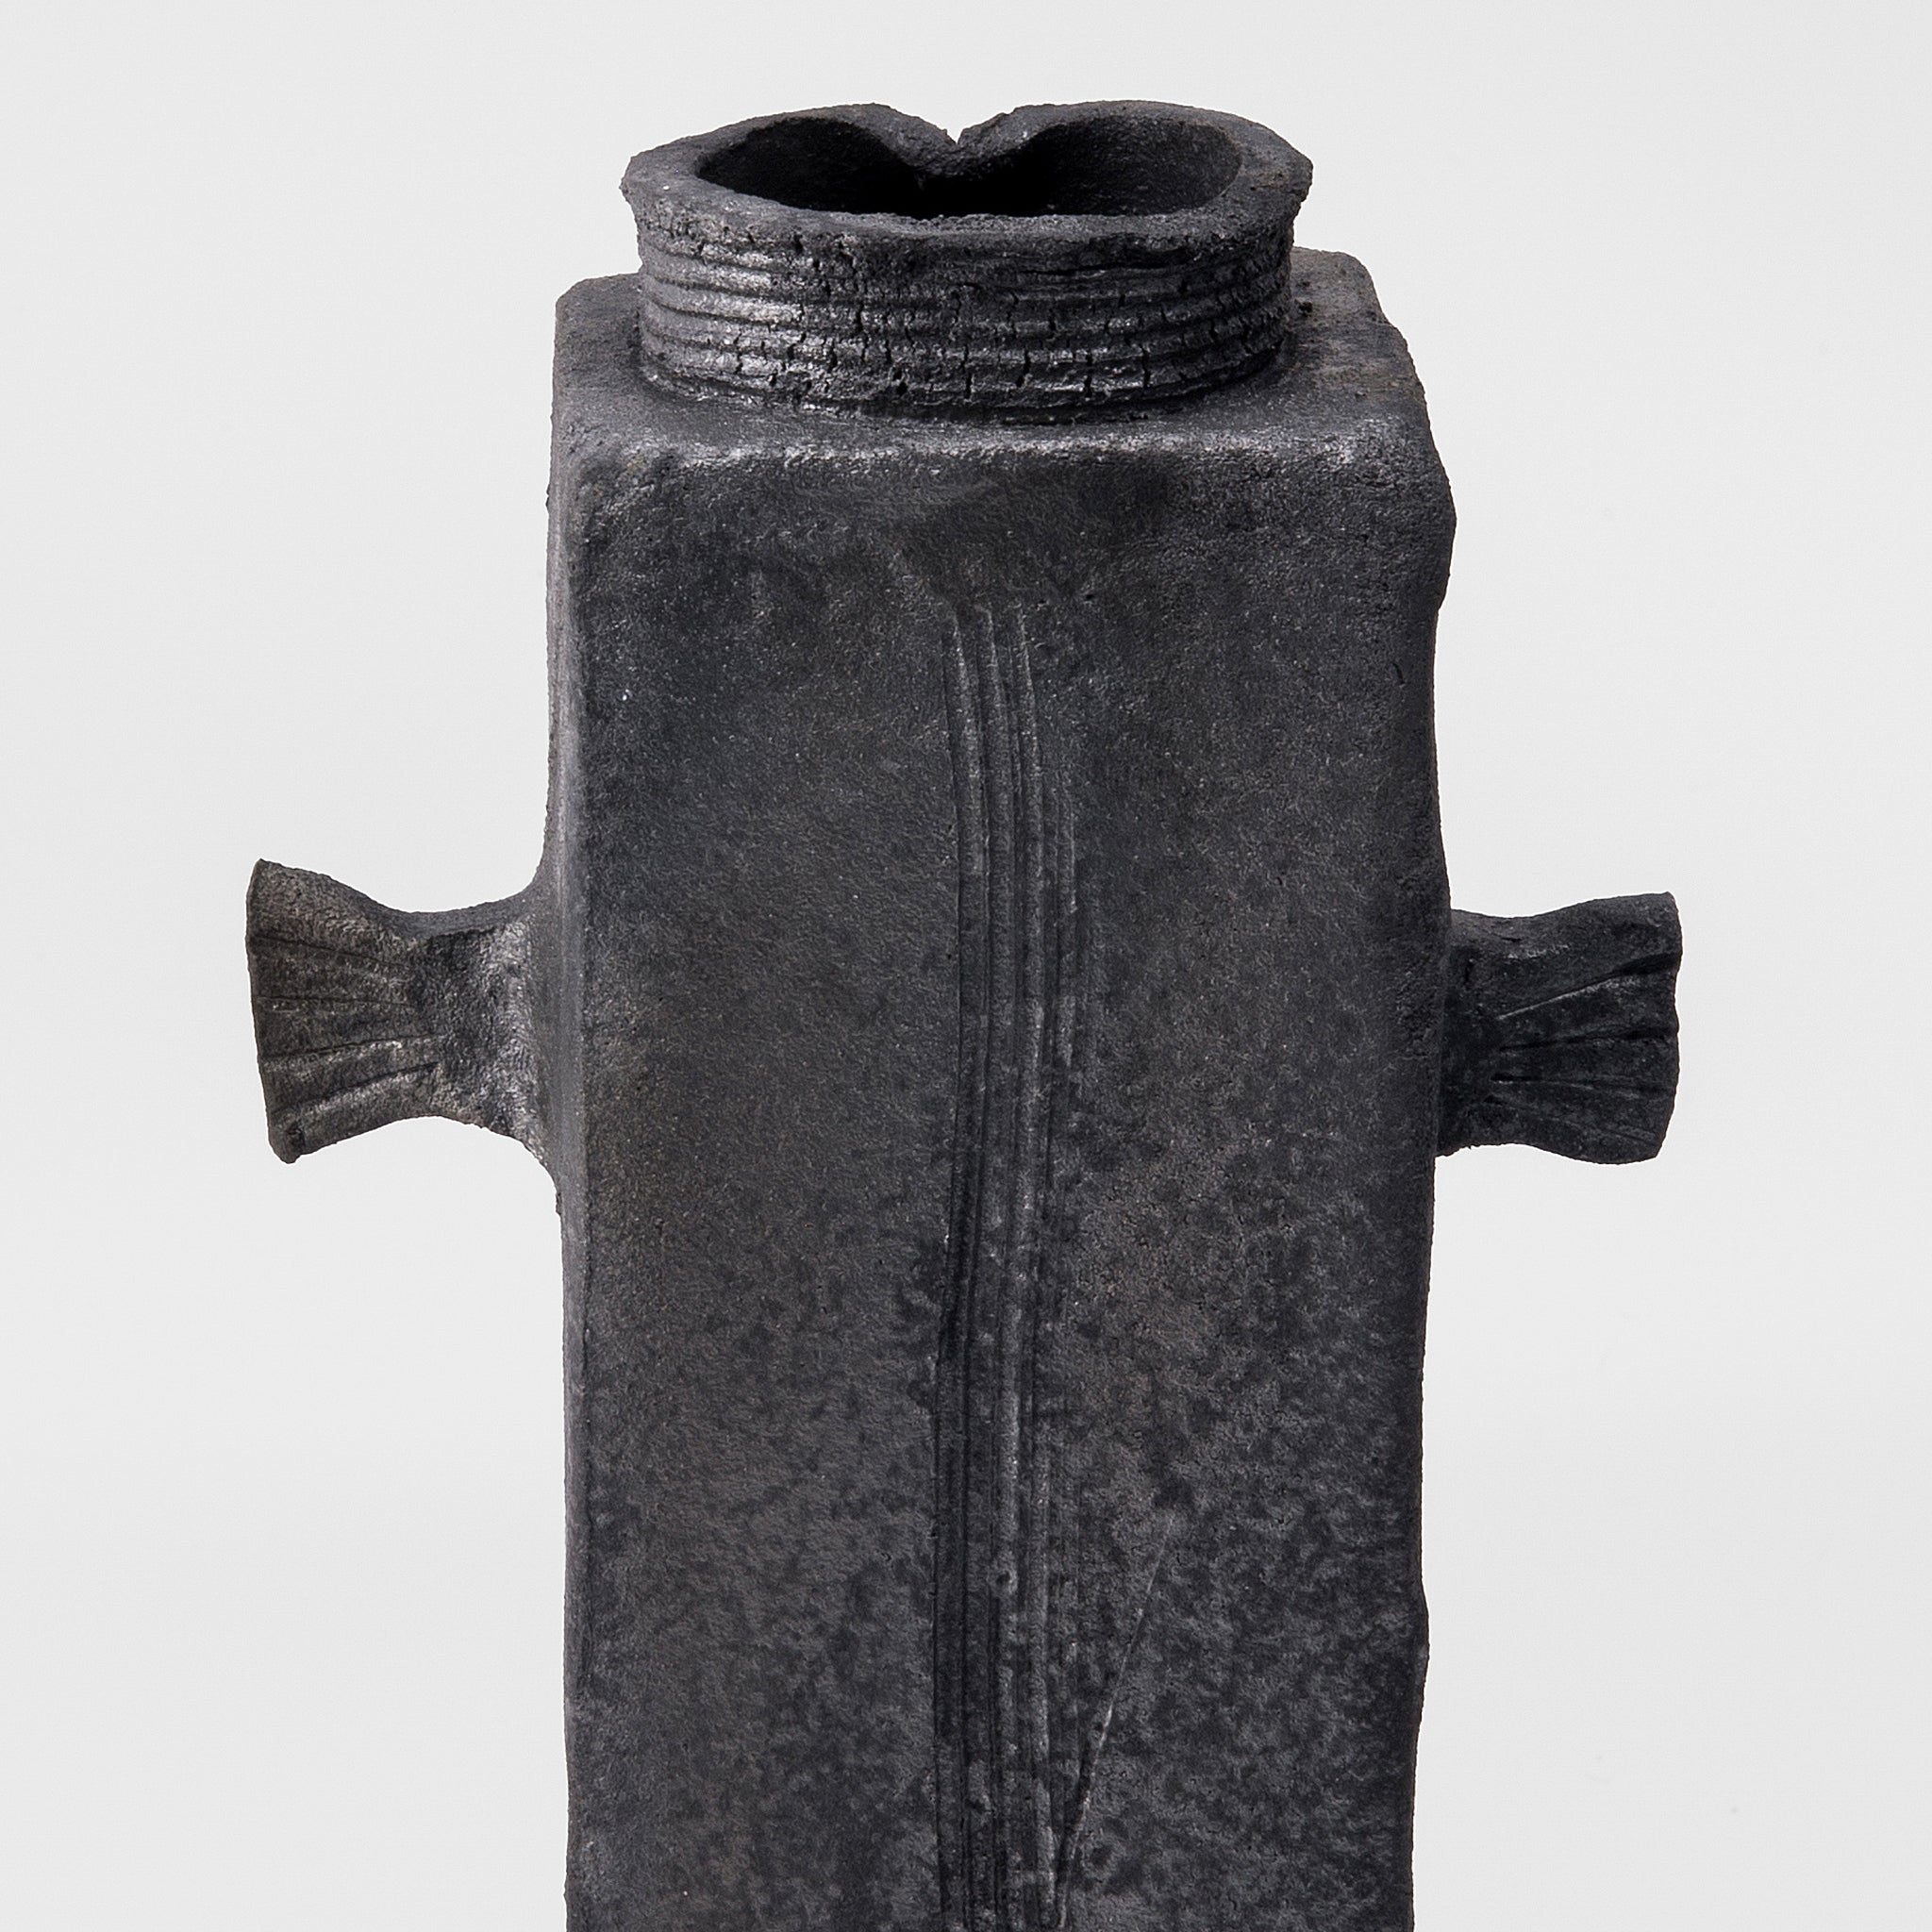 Black Vase No.214/22